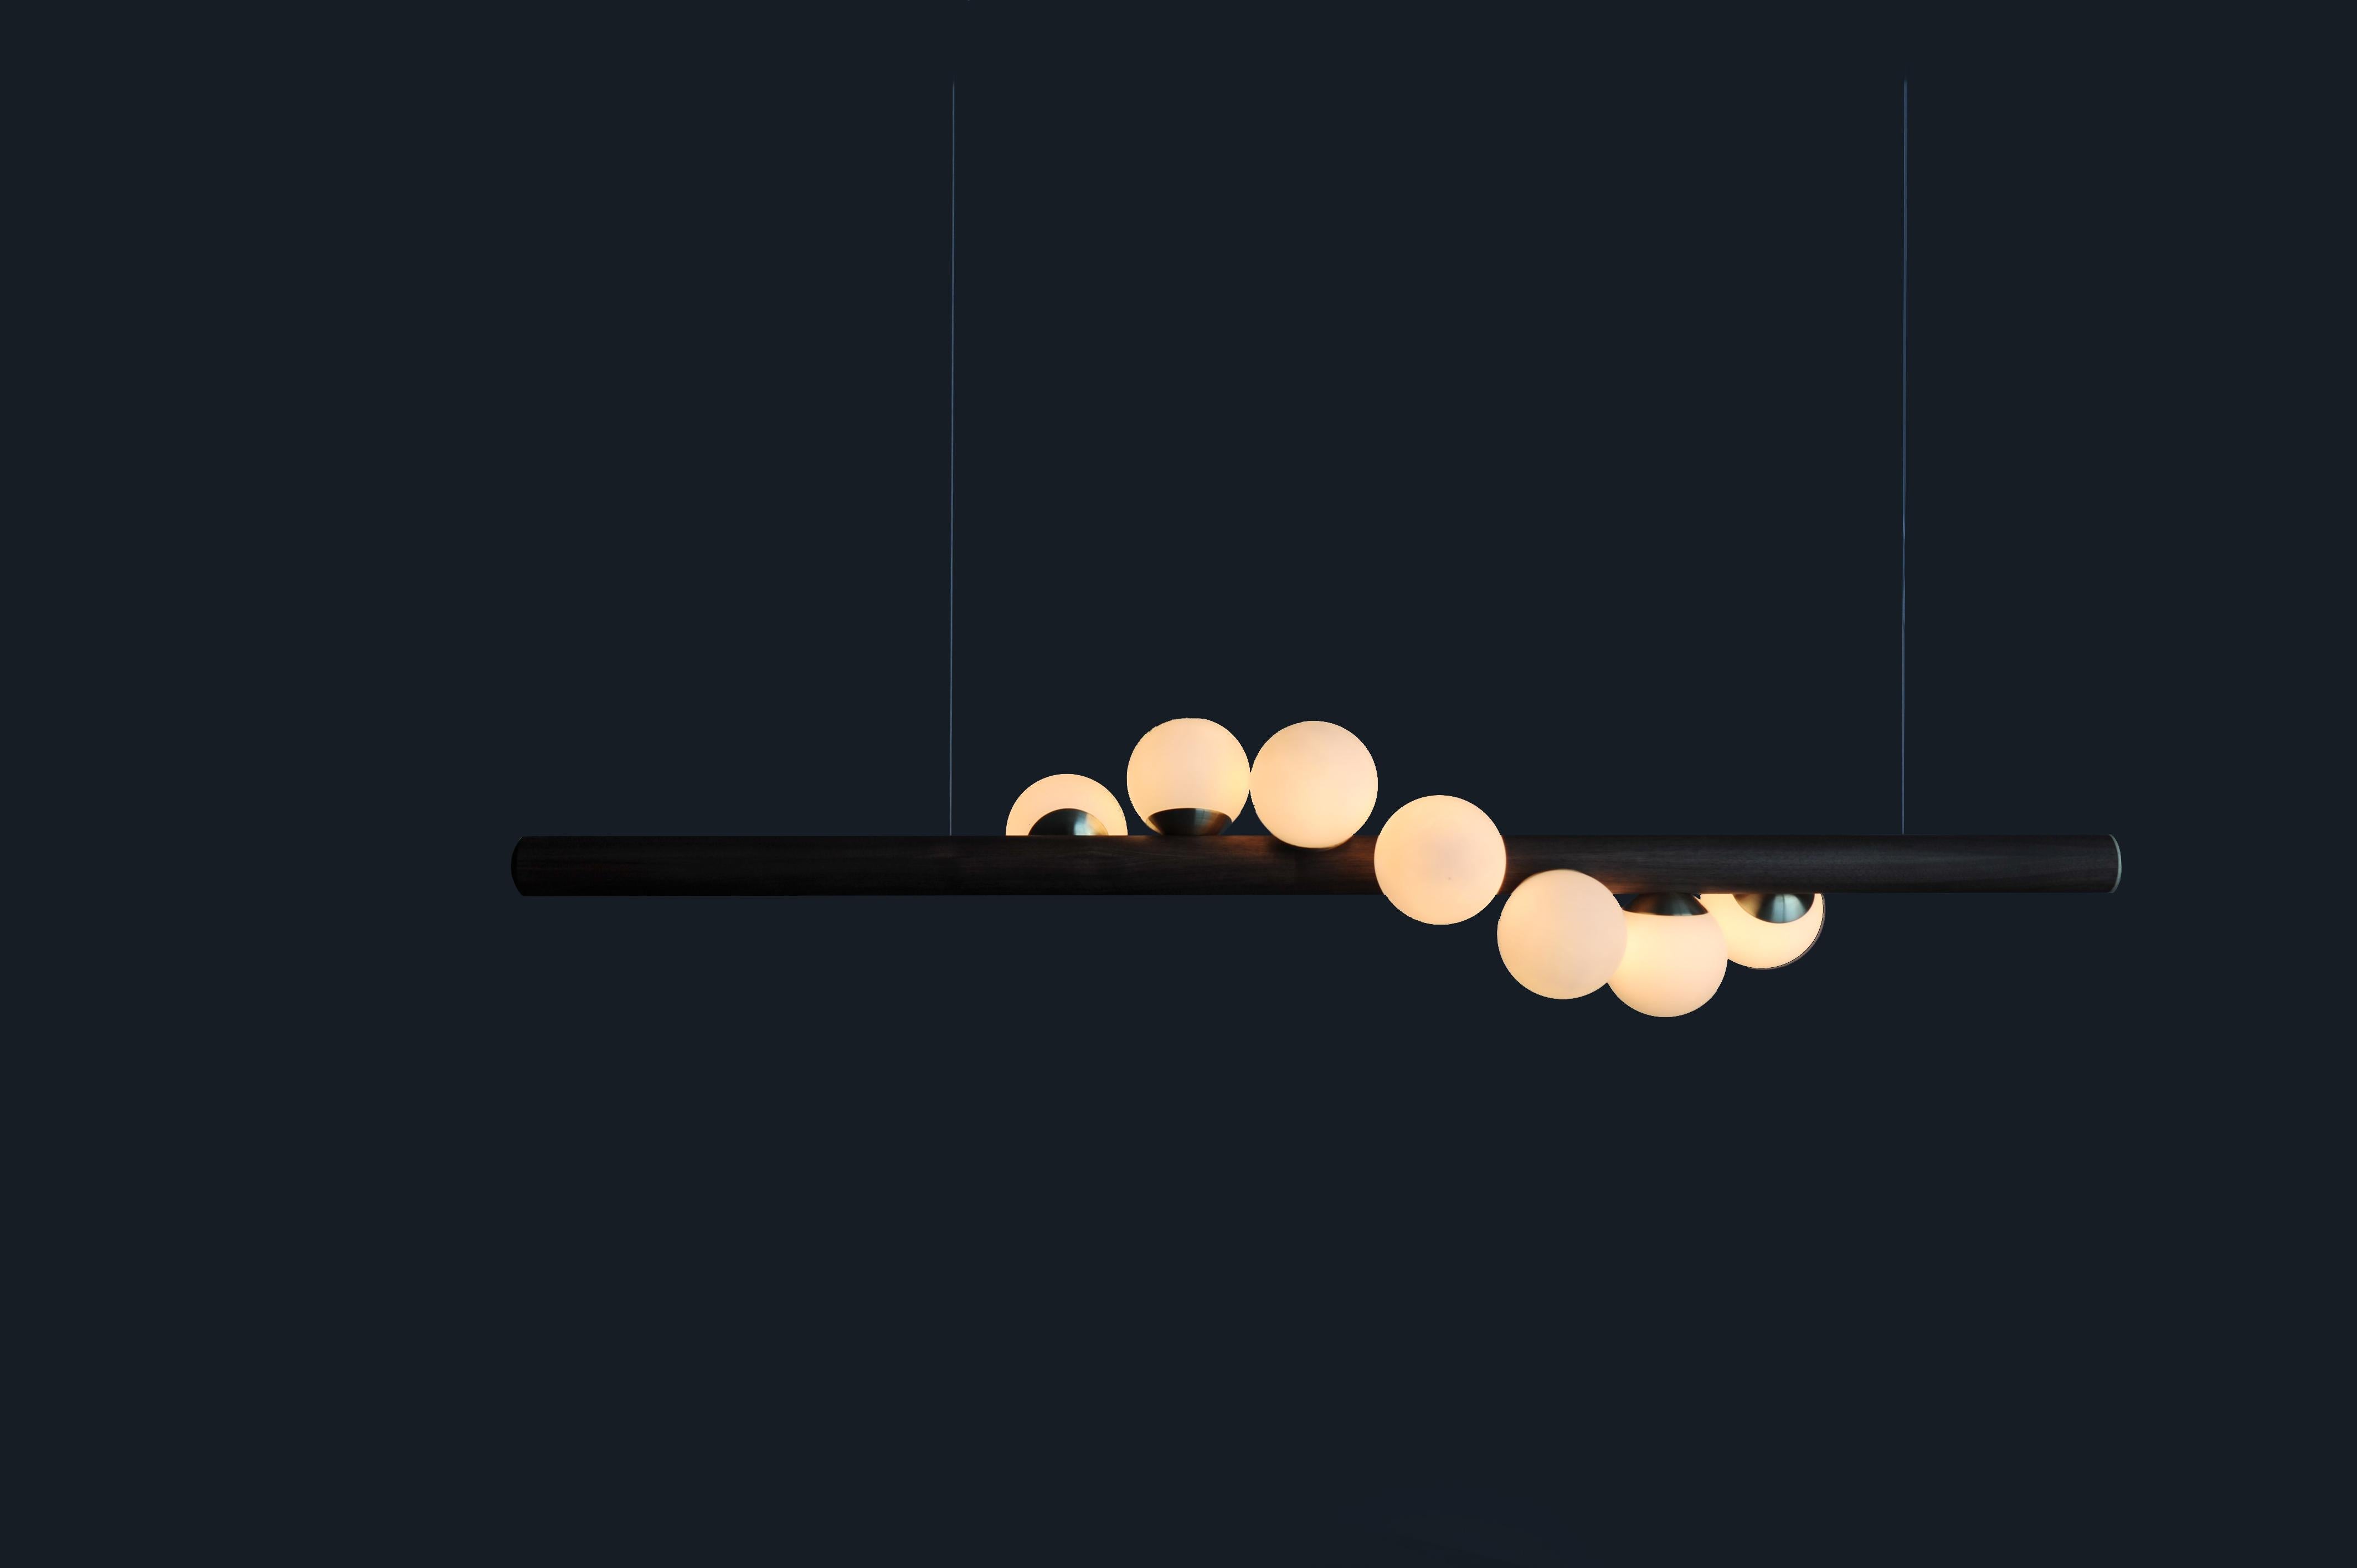 Black willow horizontal pendant light by Hollis & Morris
2019
Dimensions: 5ft - length 60” x diameter 2.25” 
Materials: Oak black, spun brass, hand blown glass

Options available:
Wood: W. oak white, w. oak natural, with oak black, walnut
3ft